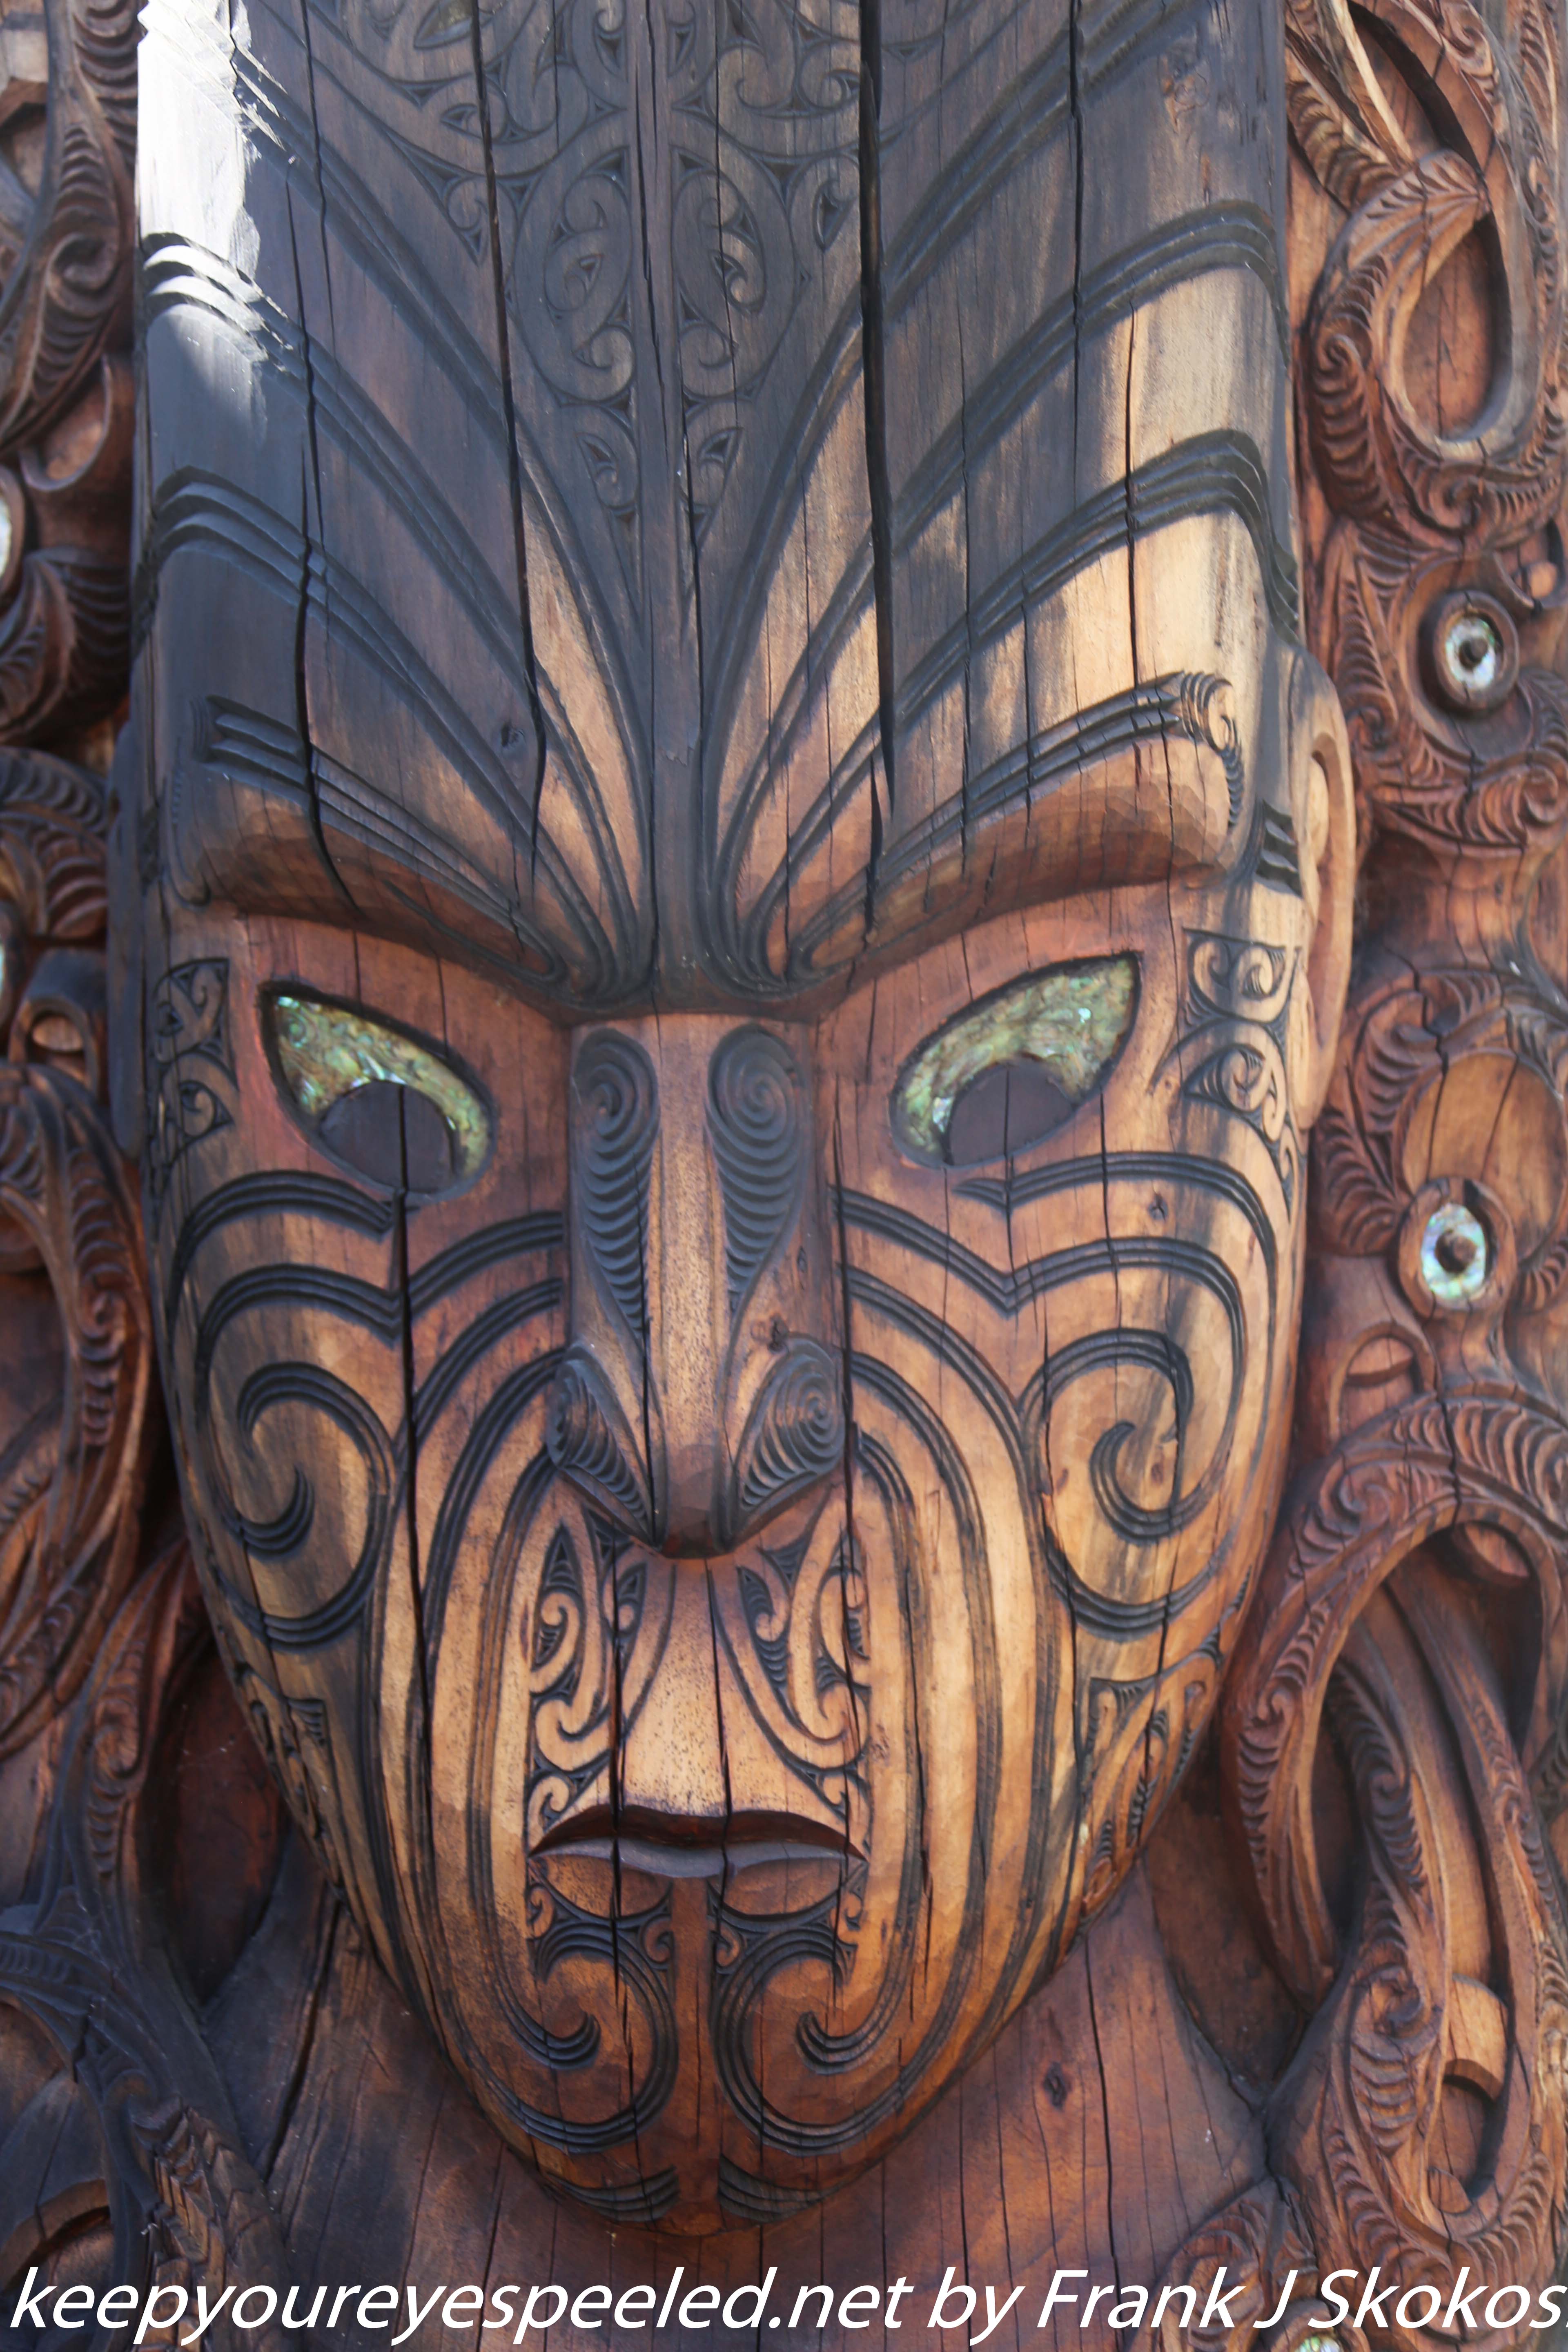 New-Zealand-Day-Fourteen-rotorua-Te-Puia-Gods-and-culture-10-of-50